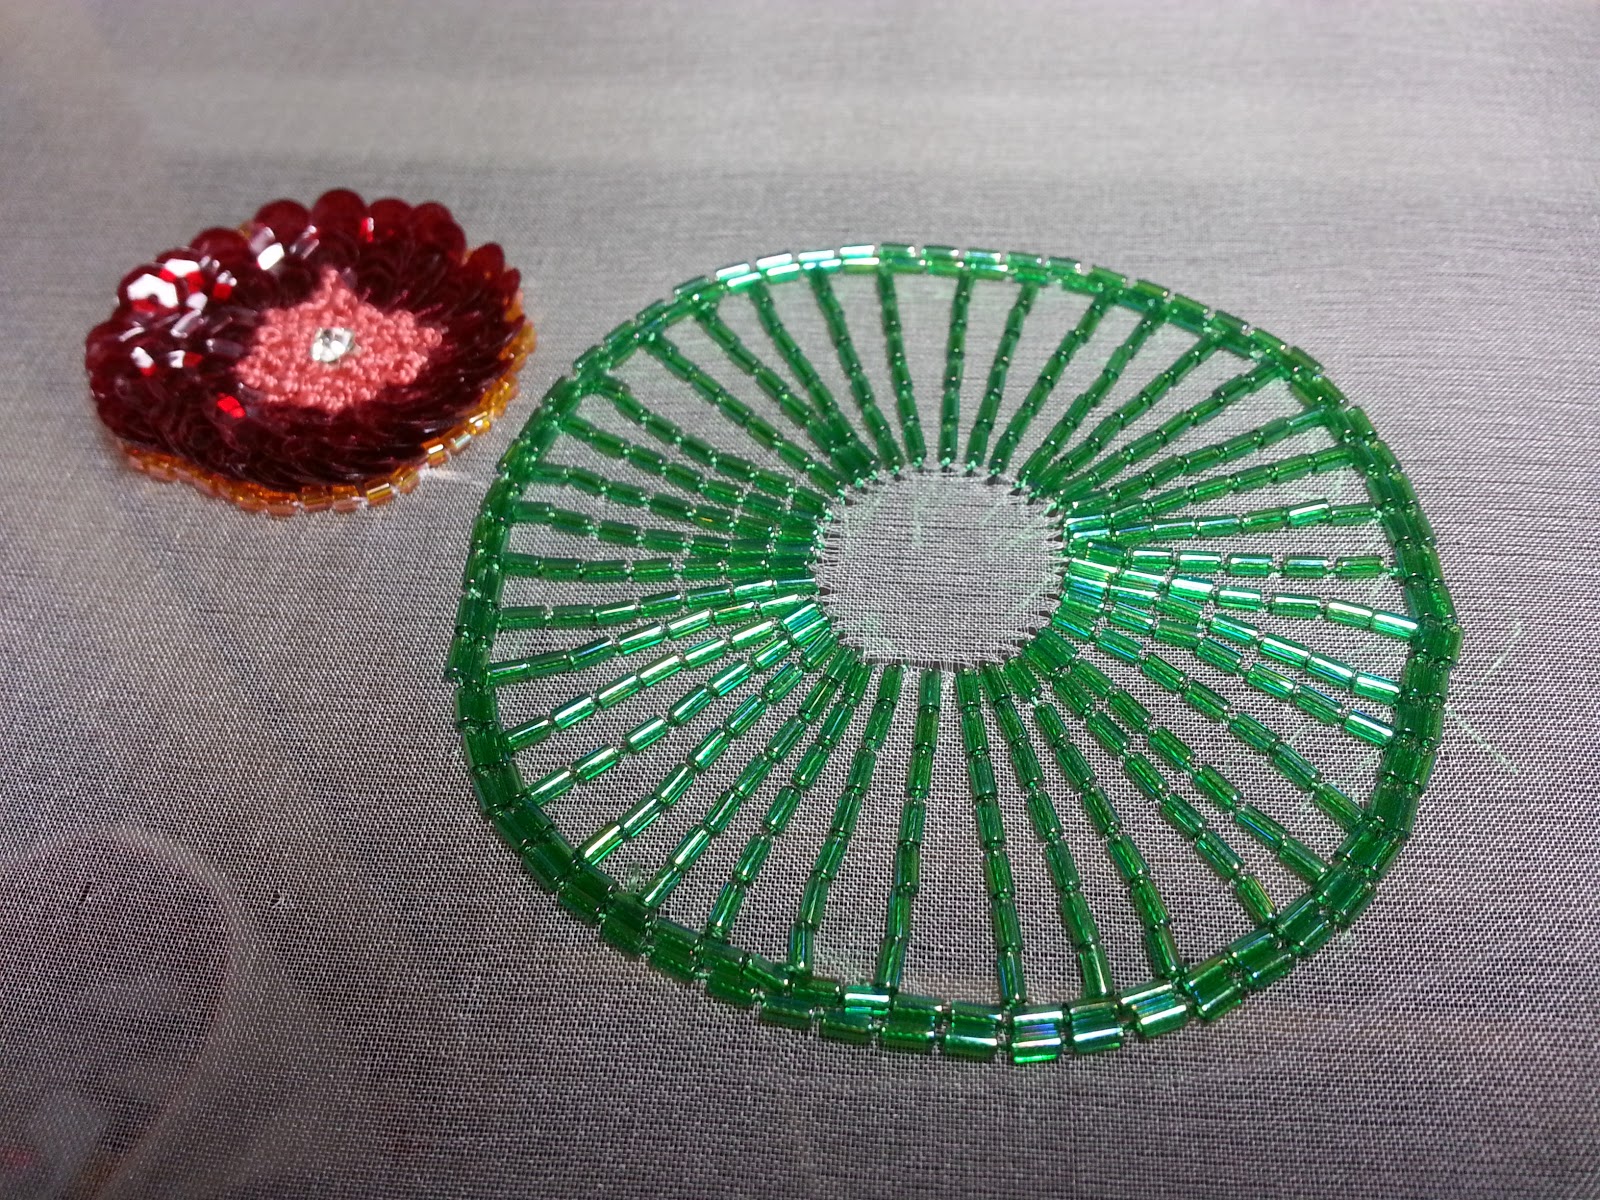 Metallic Embroidery Threads  Aari, Zardosi & Cross-Stitch Threads - Blog